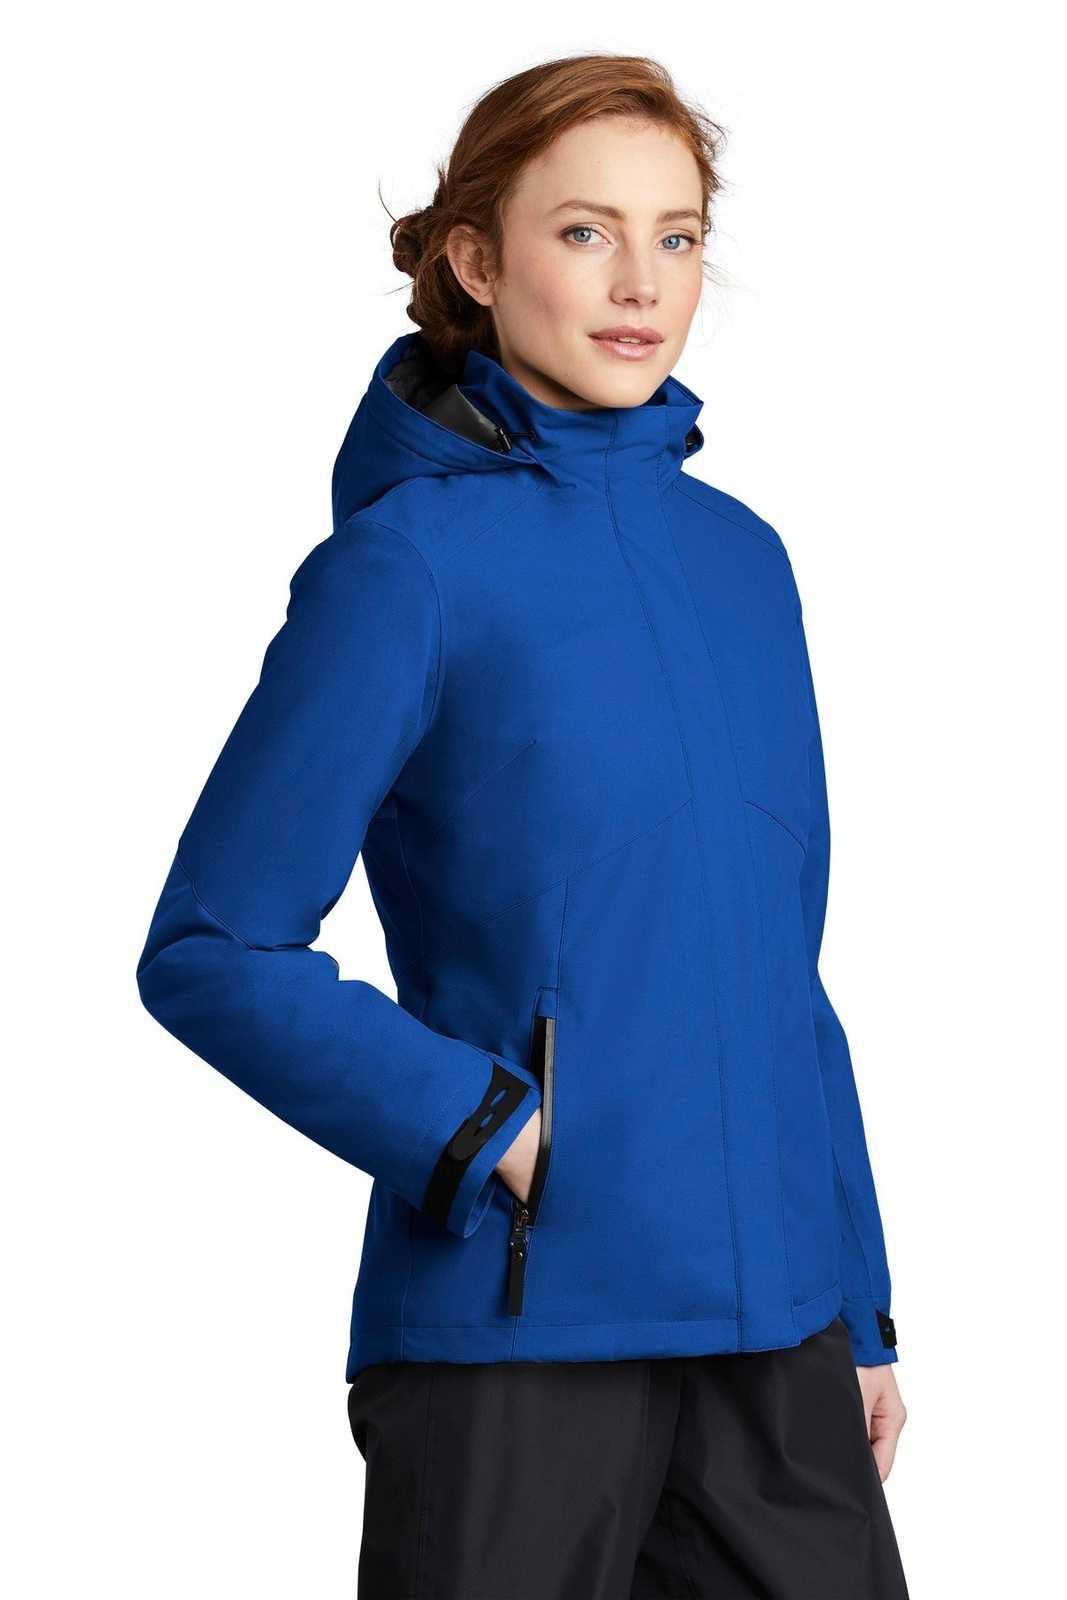 Port Authority L405 Ladies Insulated Waterproof Tech Jacket - Cobalt Blue - HIT a Double - 4